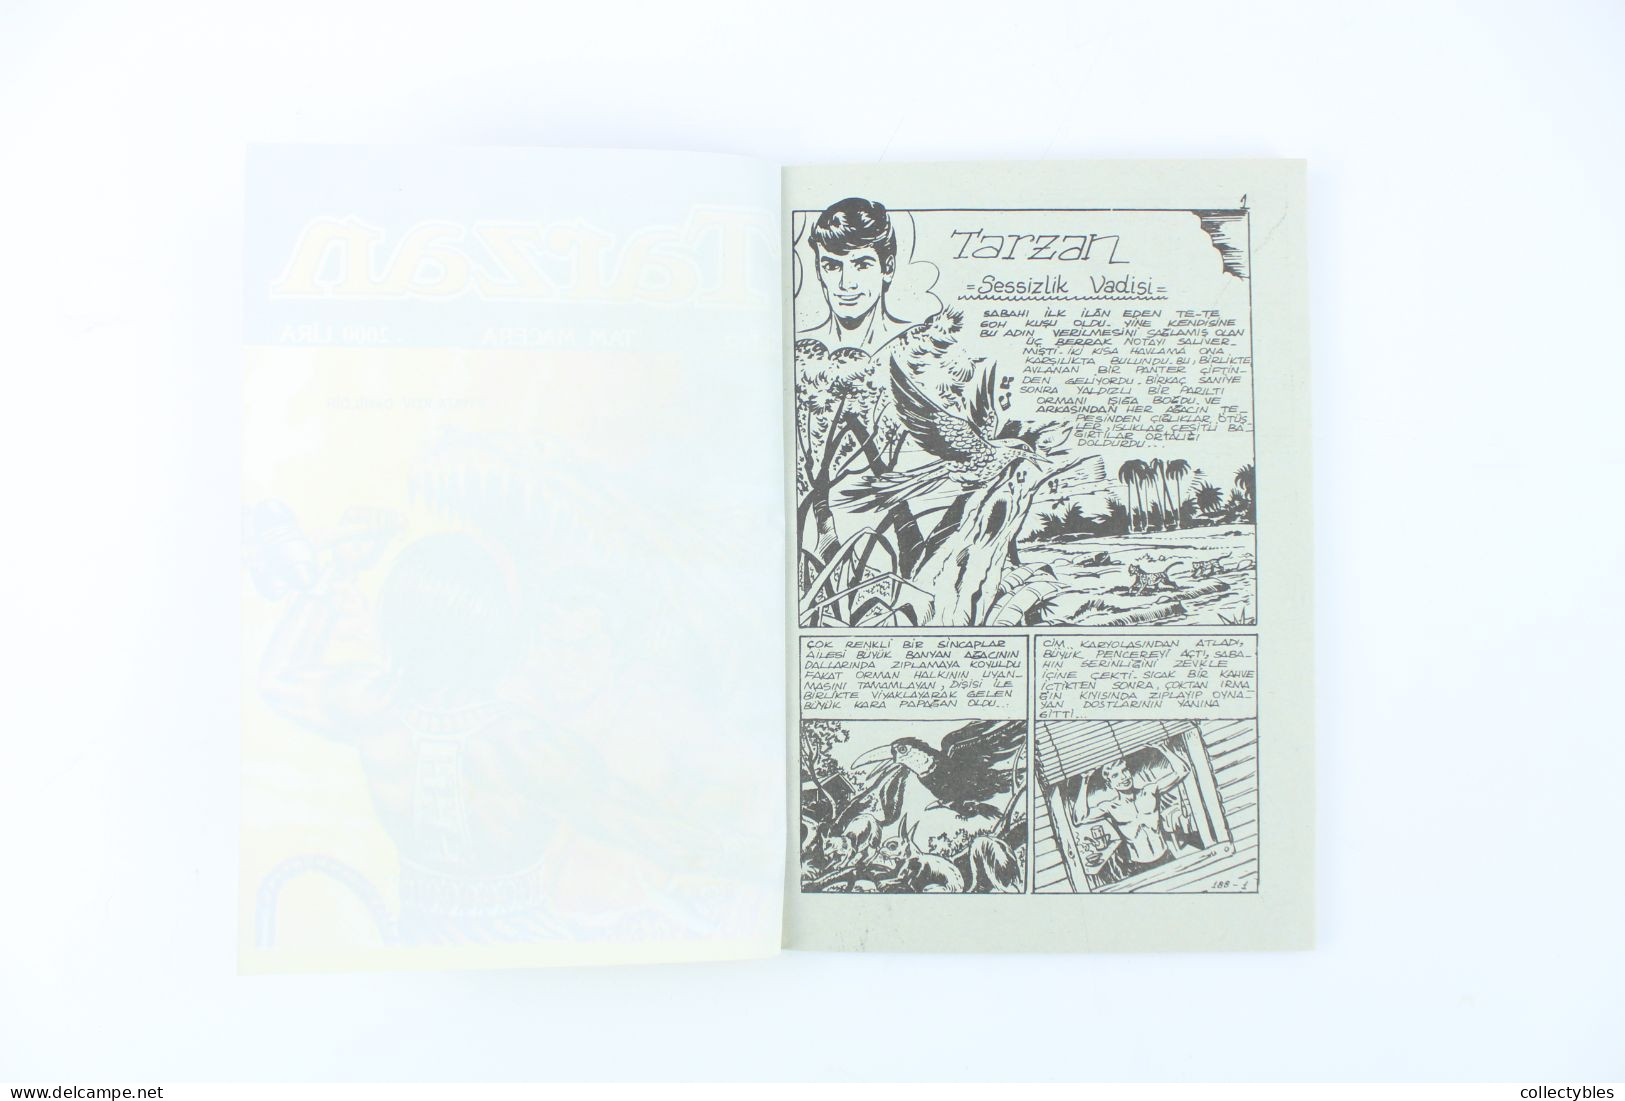 TARZAN Turkish Comic Book 1990s COMPLETE SET 1-20 Edgar Rice Burroughs RARE Free Shipping